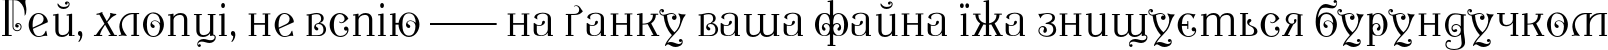 Пример написания шрифтом P22 Kilkenny Pro текста на украинском